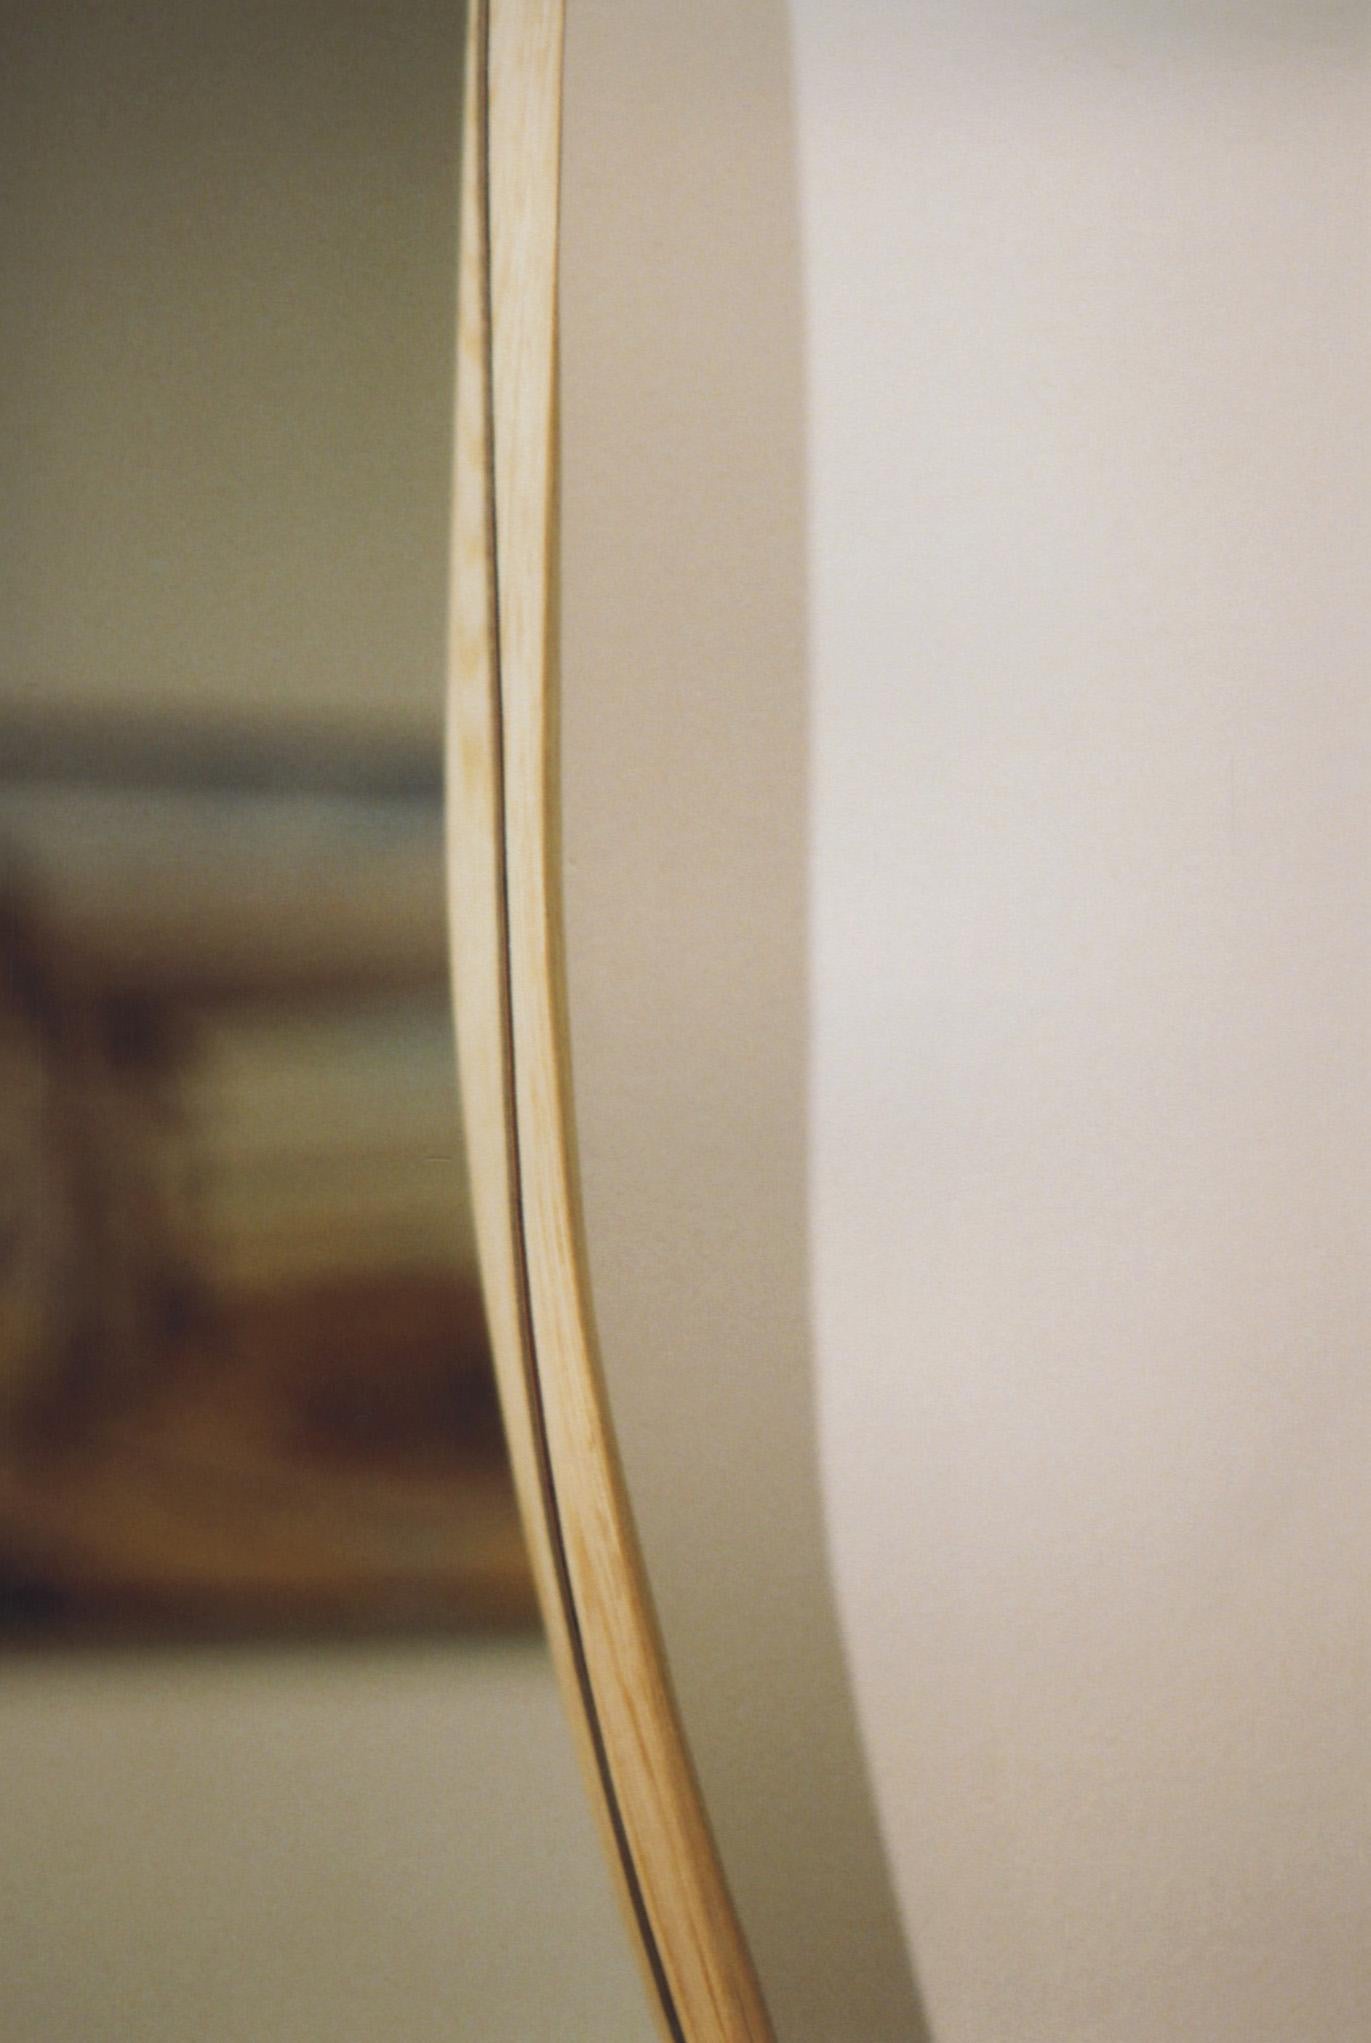 Hand-Carved Asymmetric, Organic Wall Mirror, Bent-lamination 'Momentum Mirror' by Soo Joo 